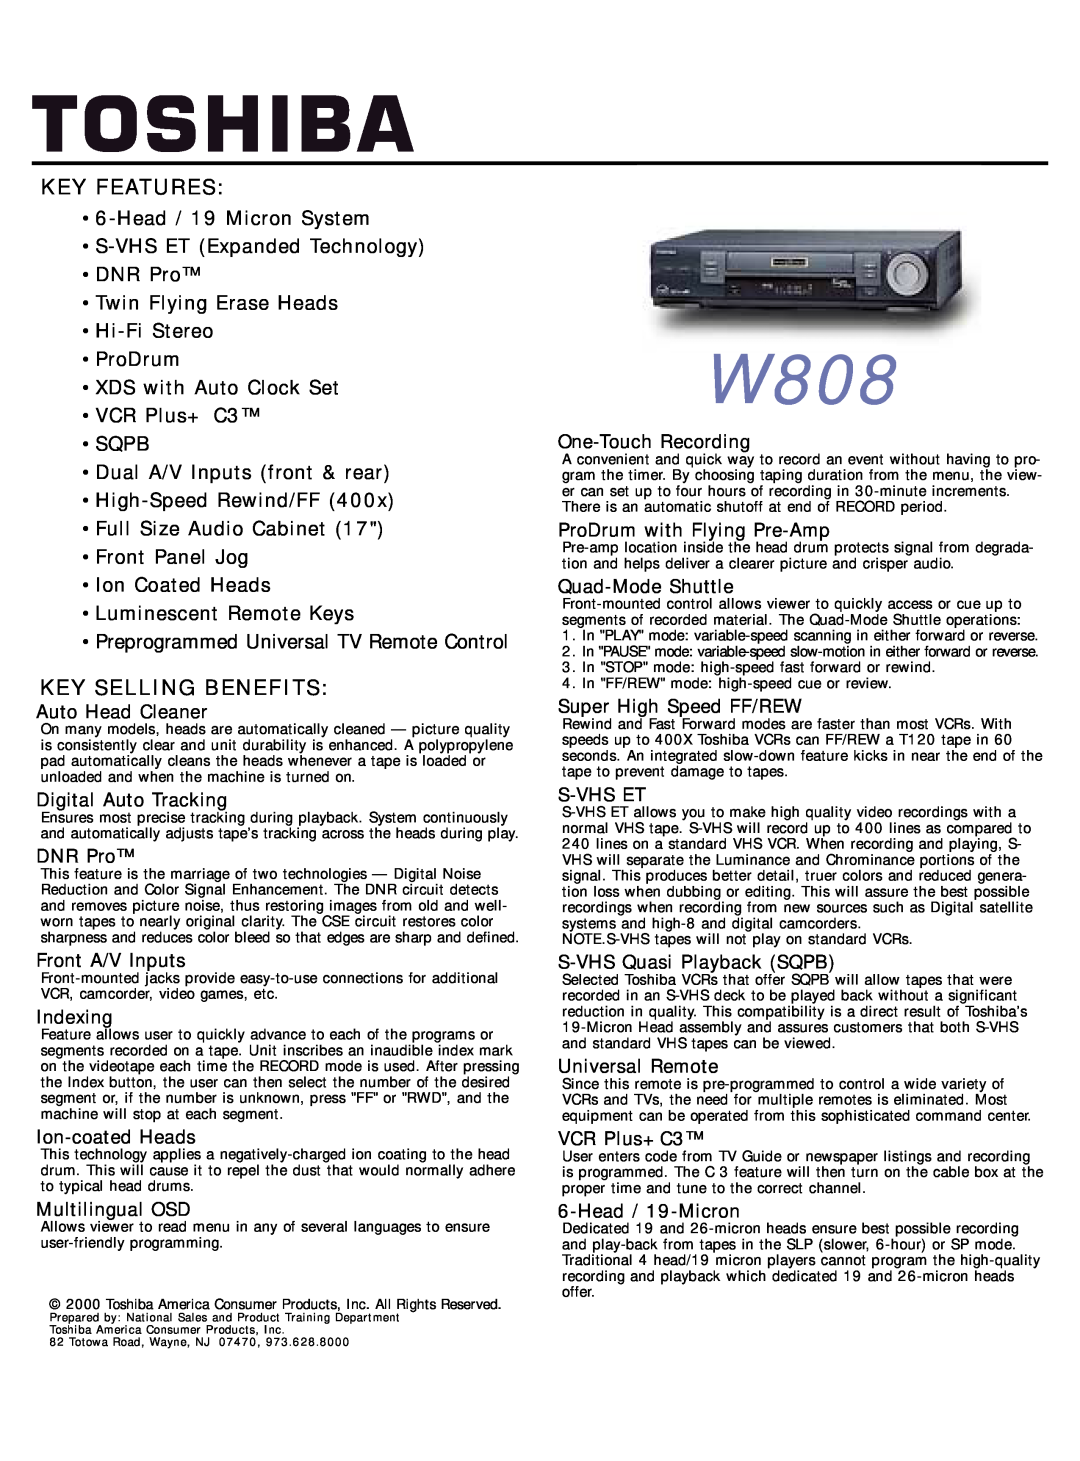 Toshiba W808 manual Key Features, Key Selling Benefits 